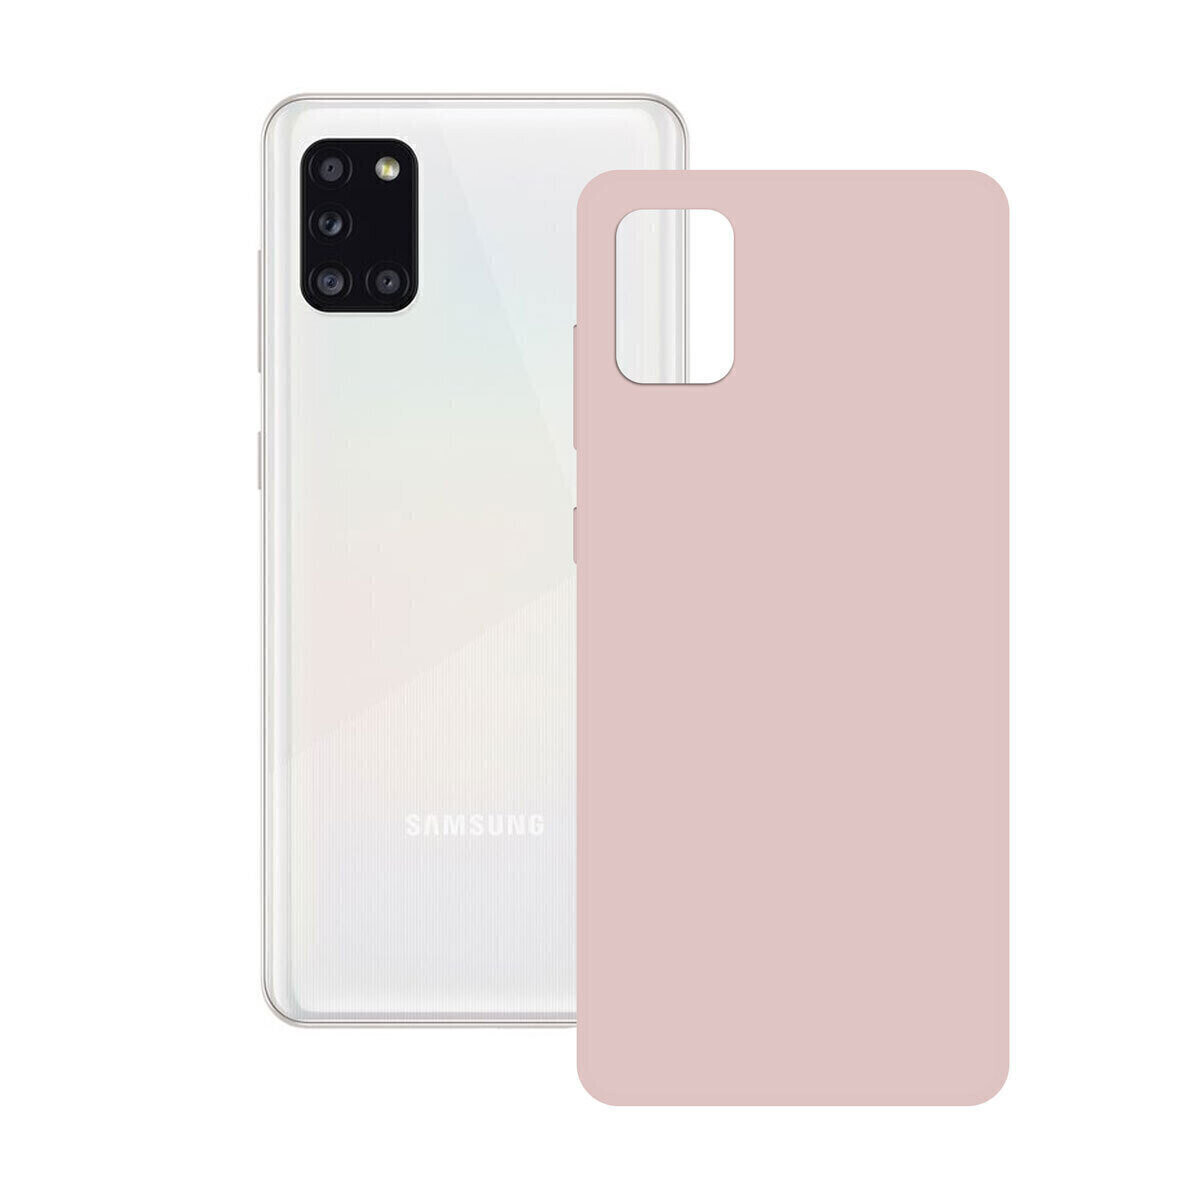 Komass Samsung Galaxy A31 Liquid Silicone Back Cover, Pink